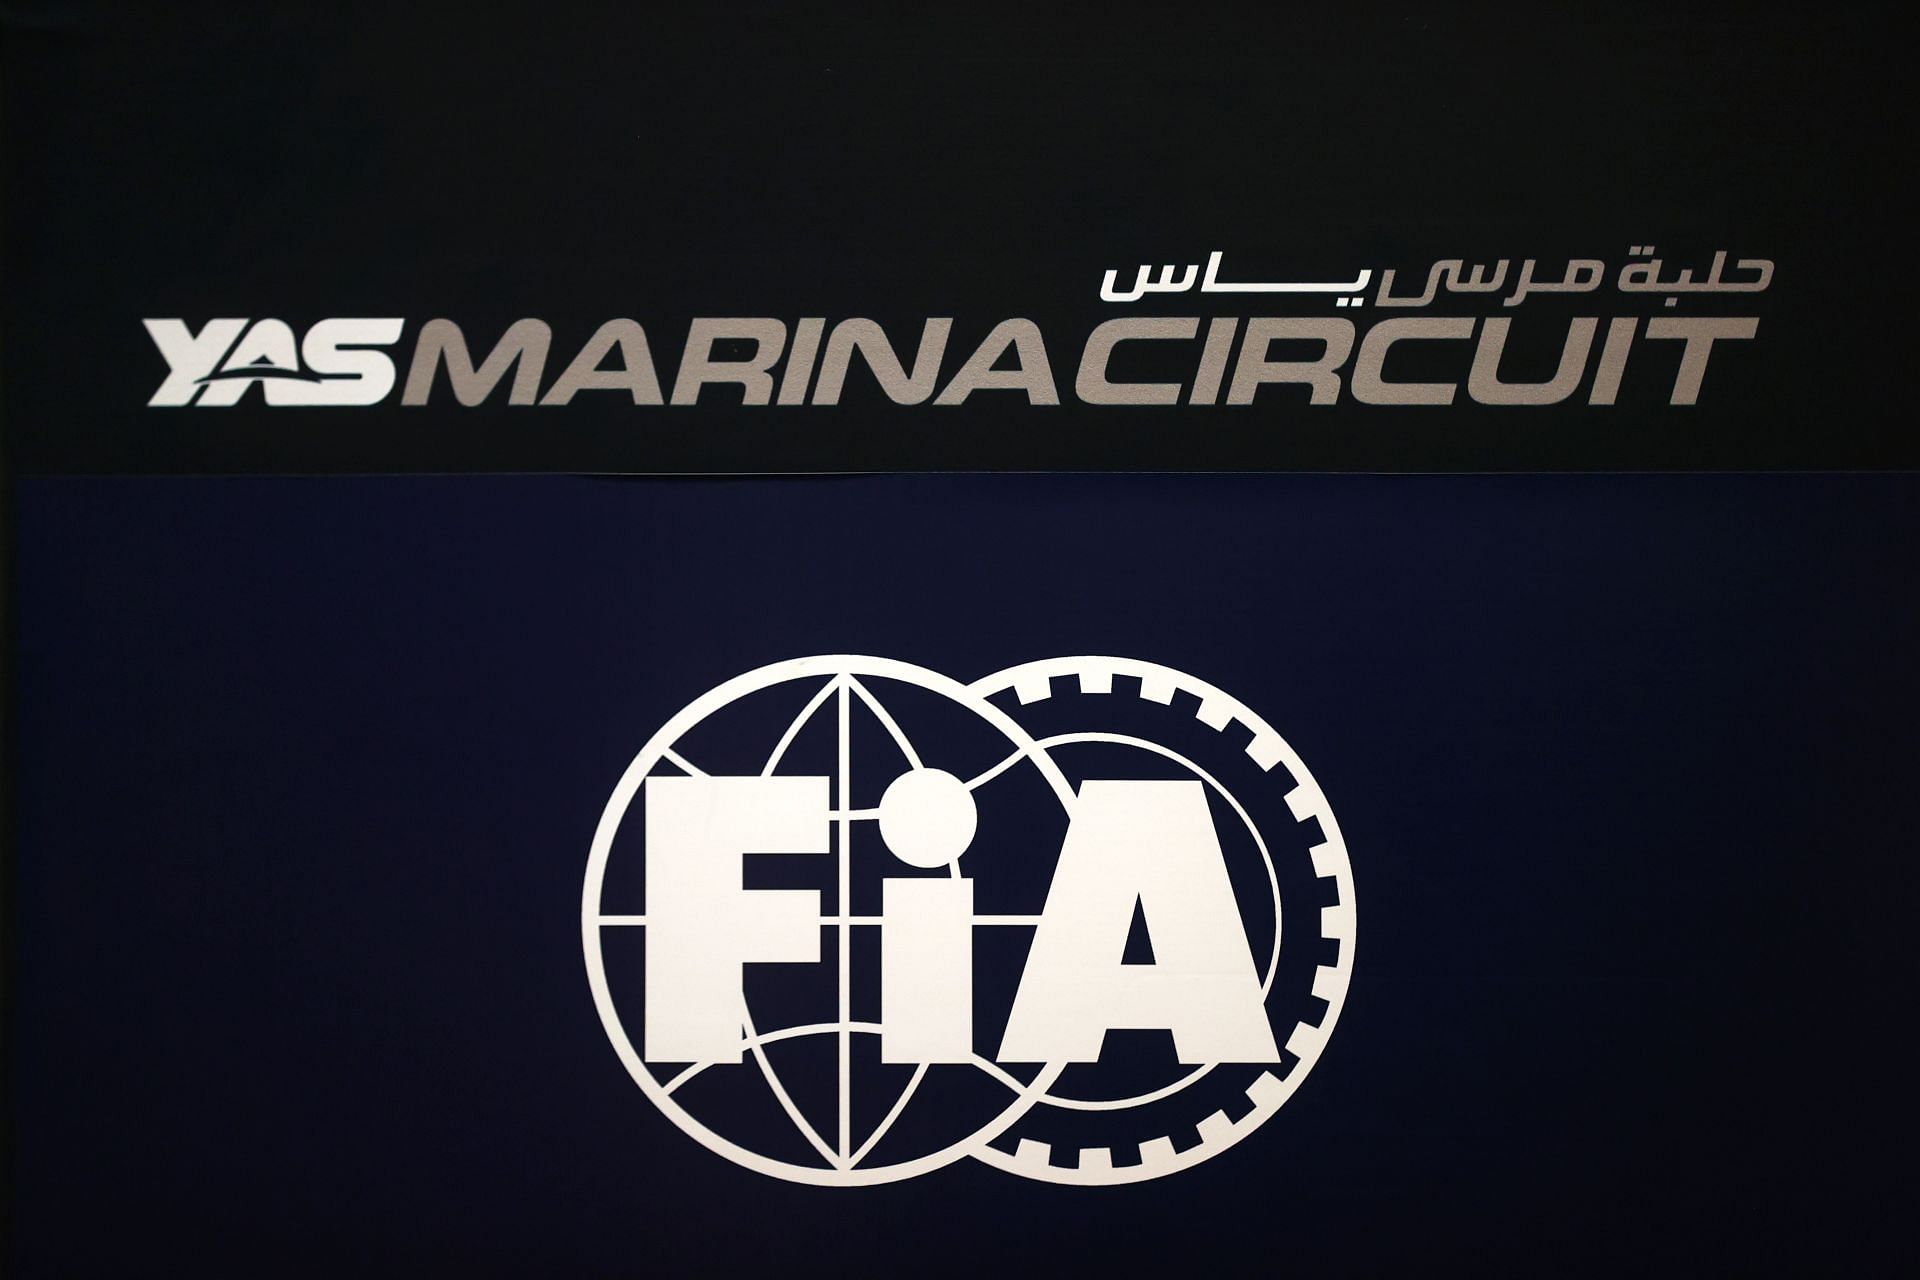 F1 Grand Prix of Abu Dhabi - The FIA logo features below the Yas Marina logo.